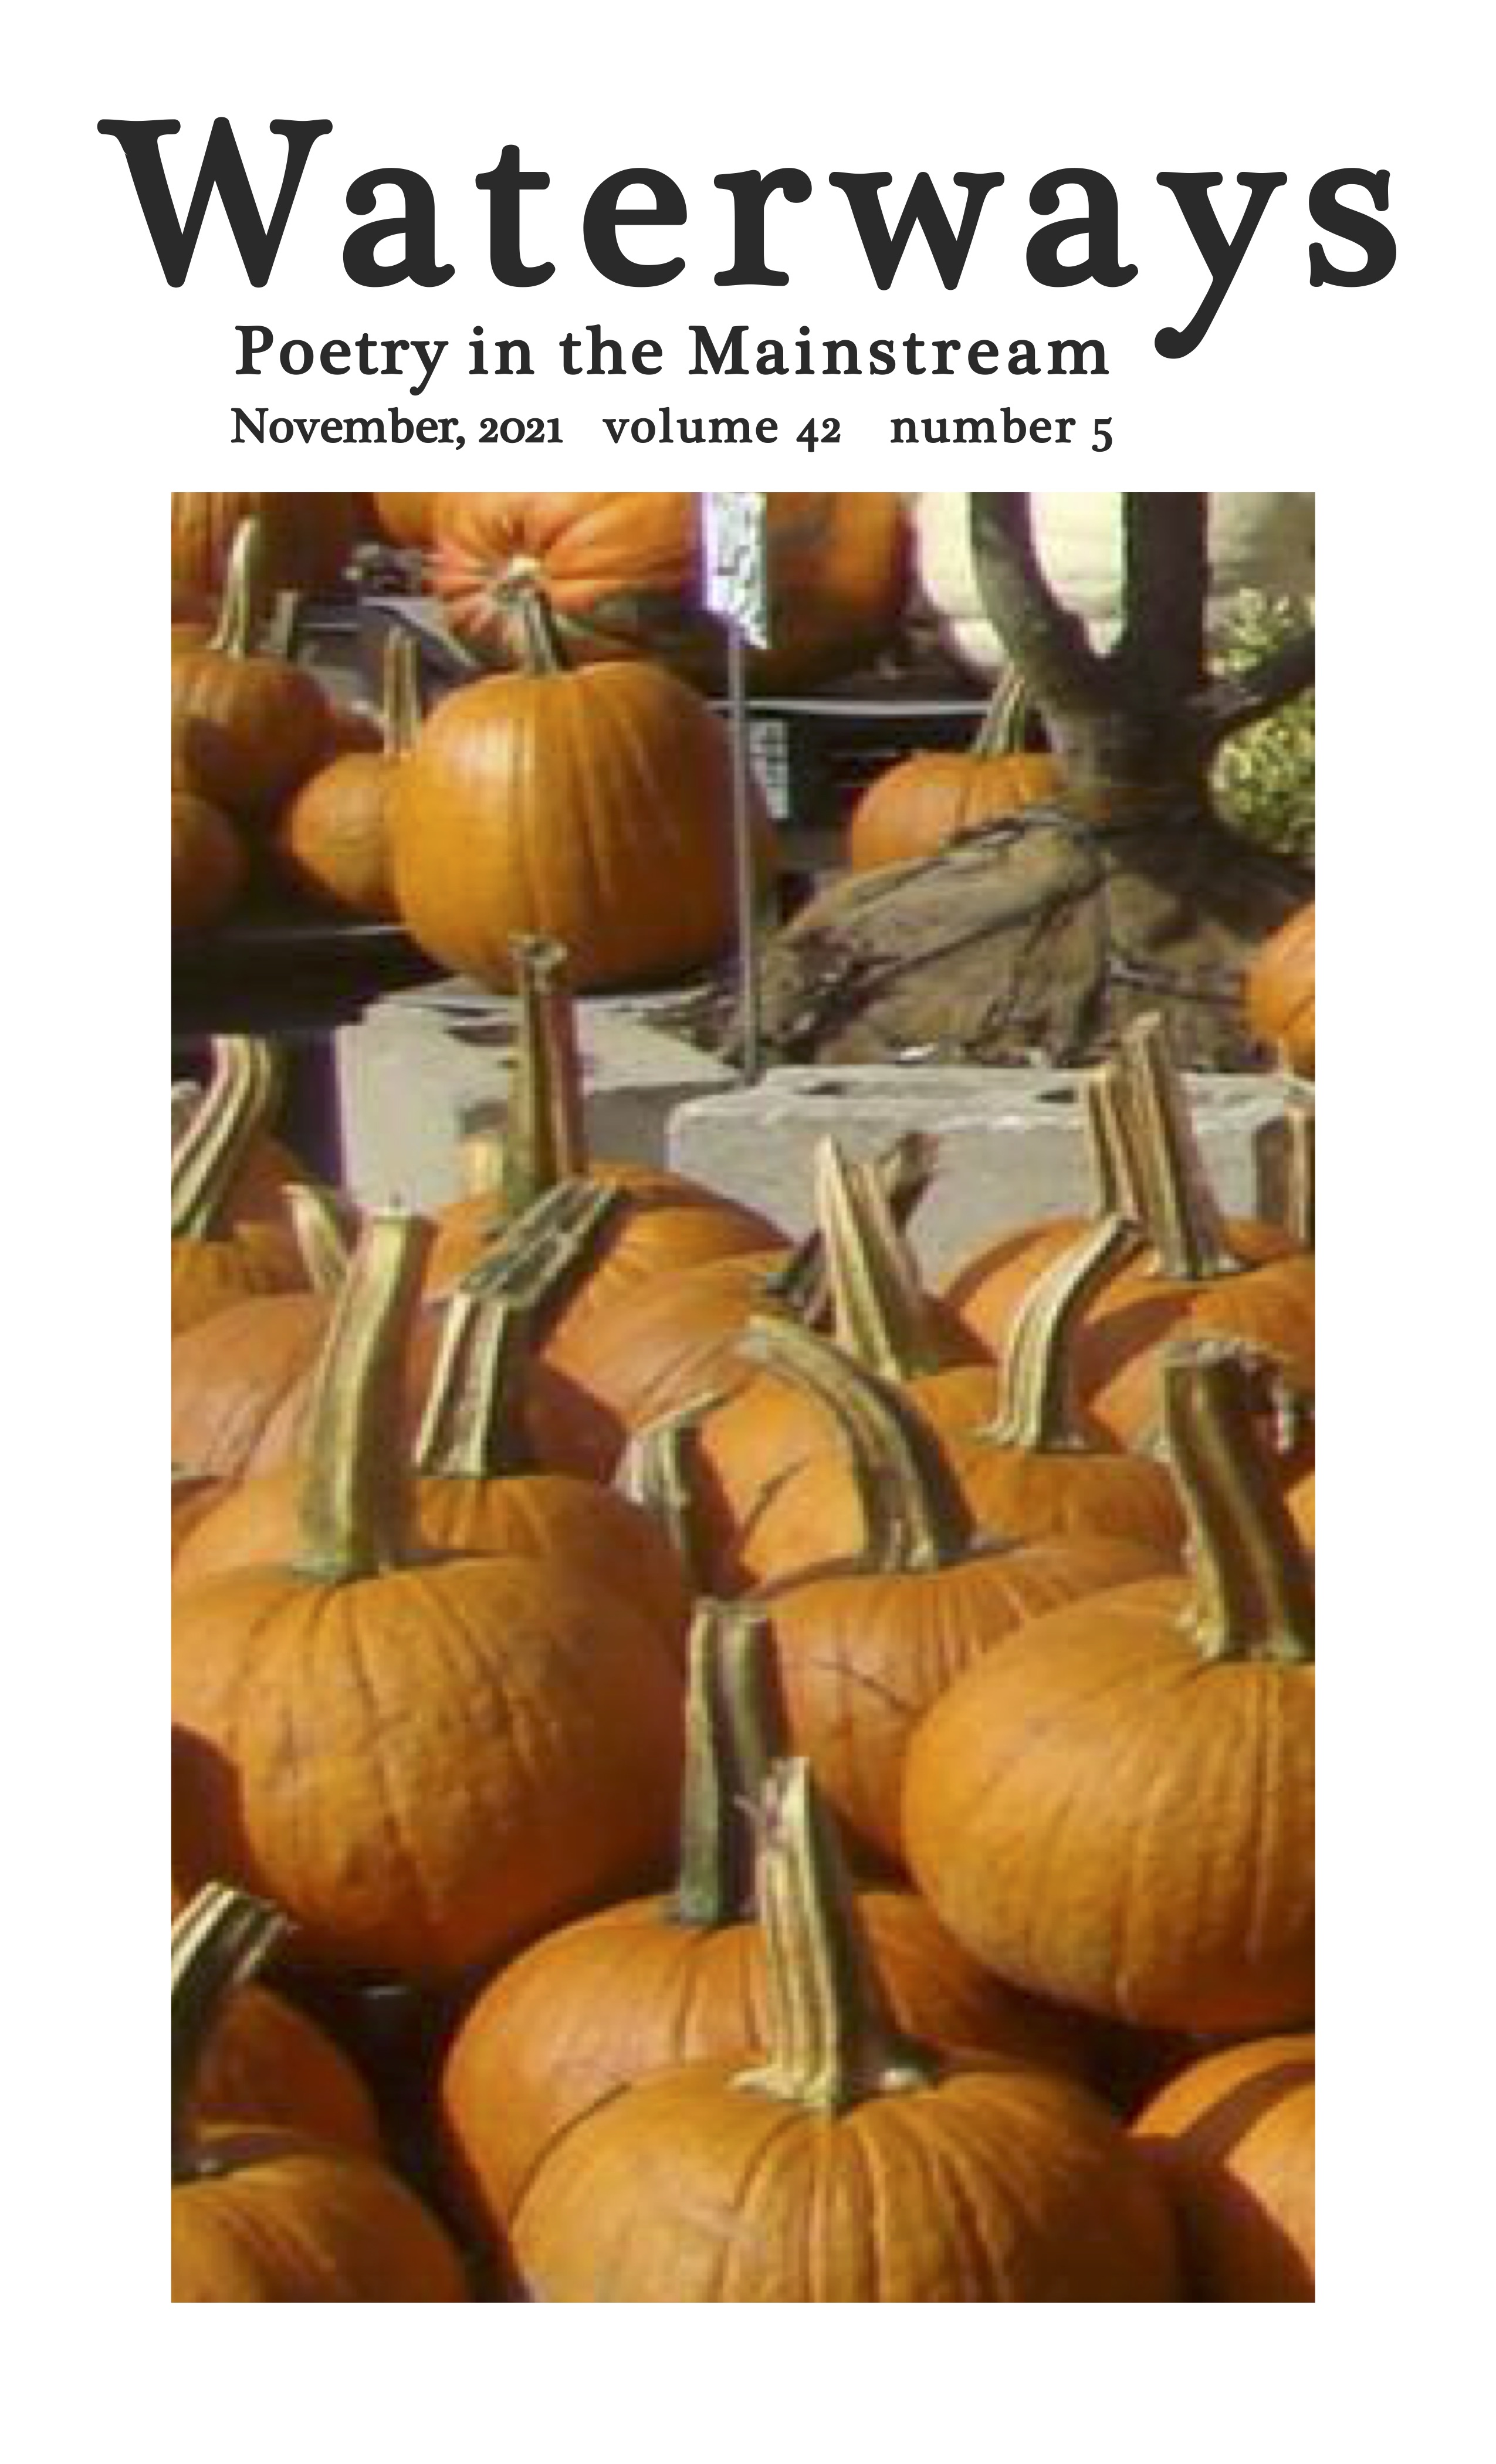 pumpkins and squash on display at farmers' market